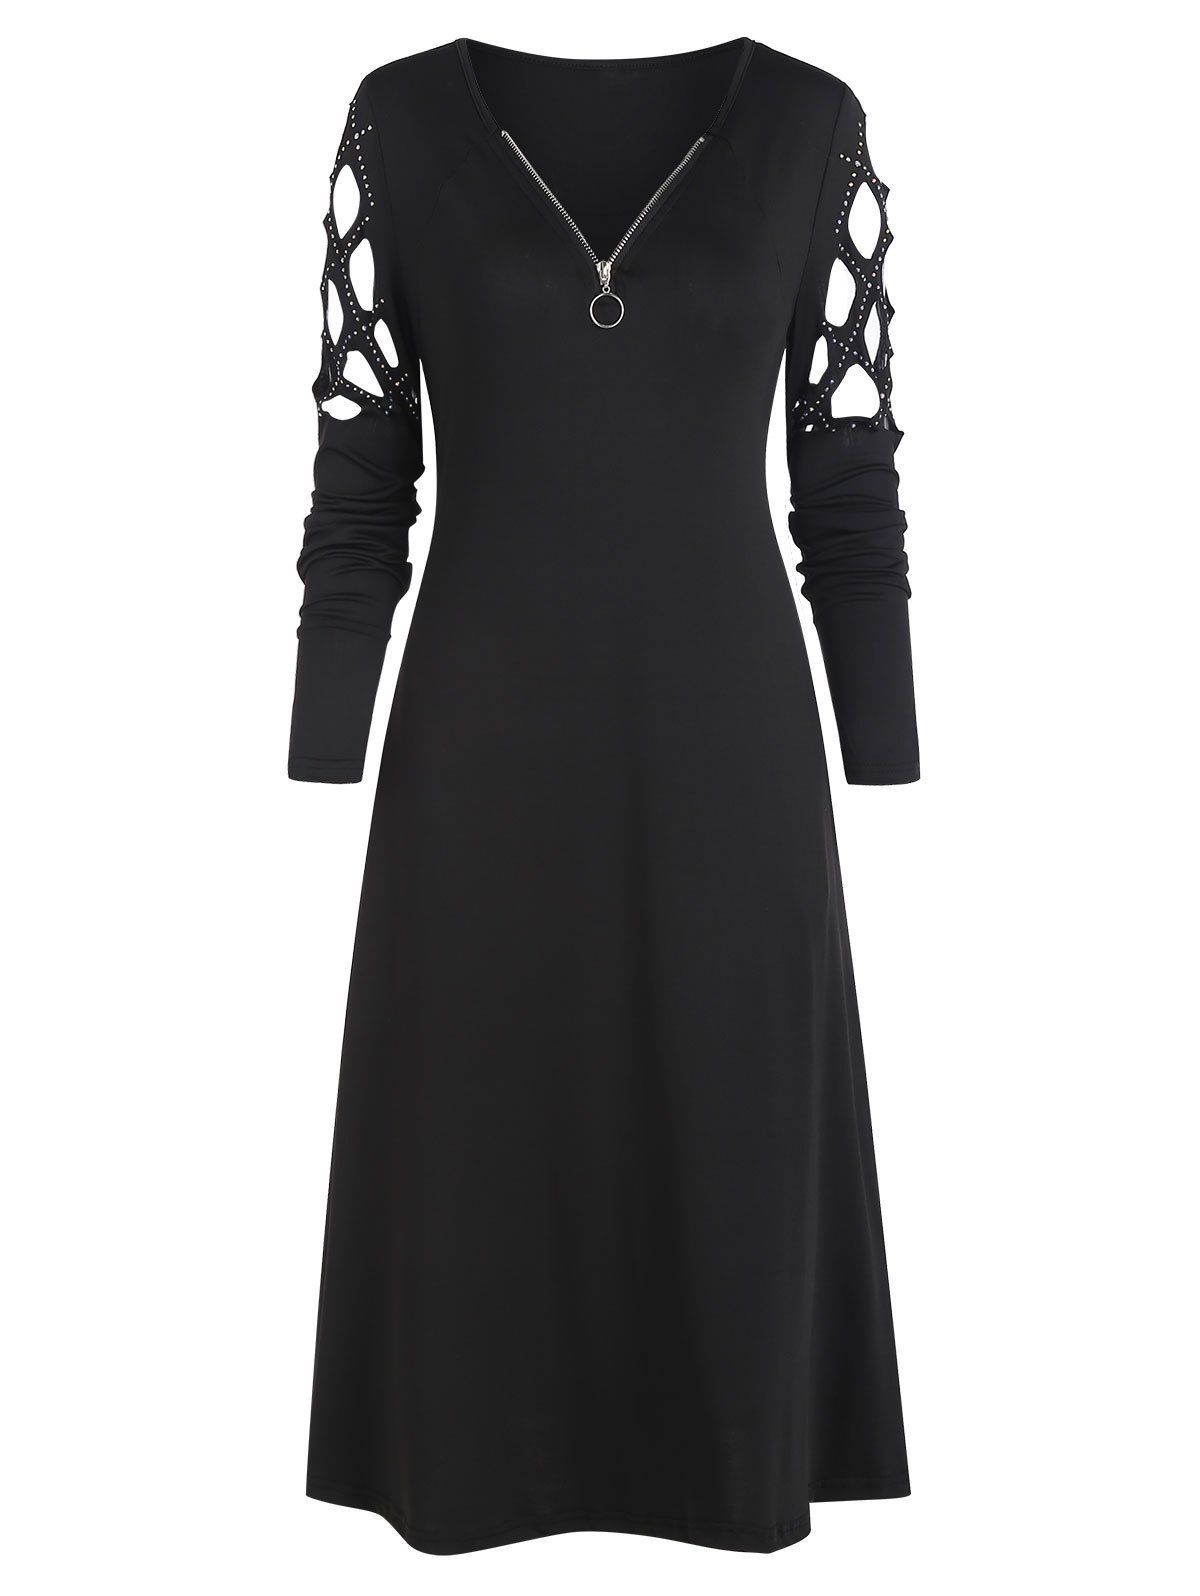 Rhinestone Caged Sleeve O Ring Zip Dress - BLACK 2XL